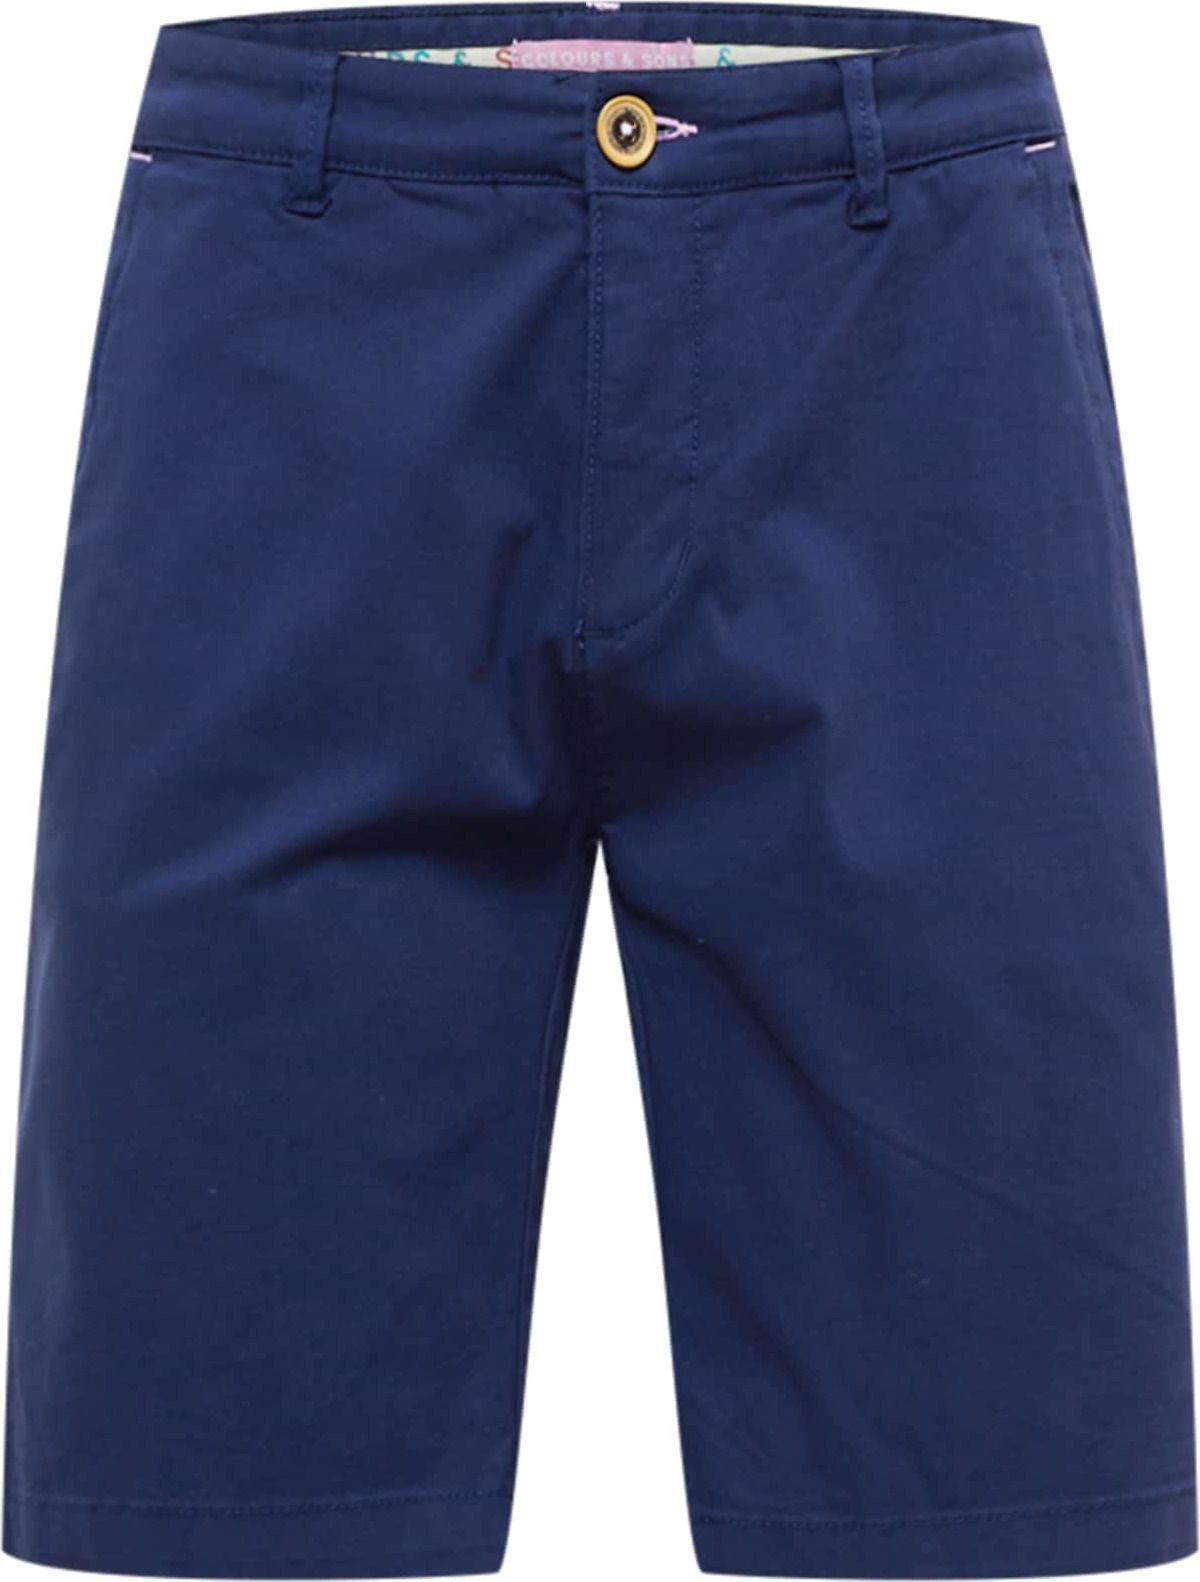 COLOURS & SONS Chino kalhoty marine modrá